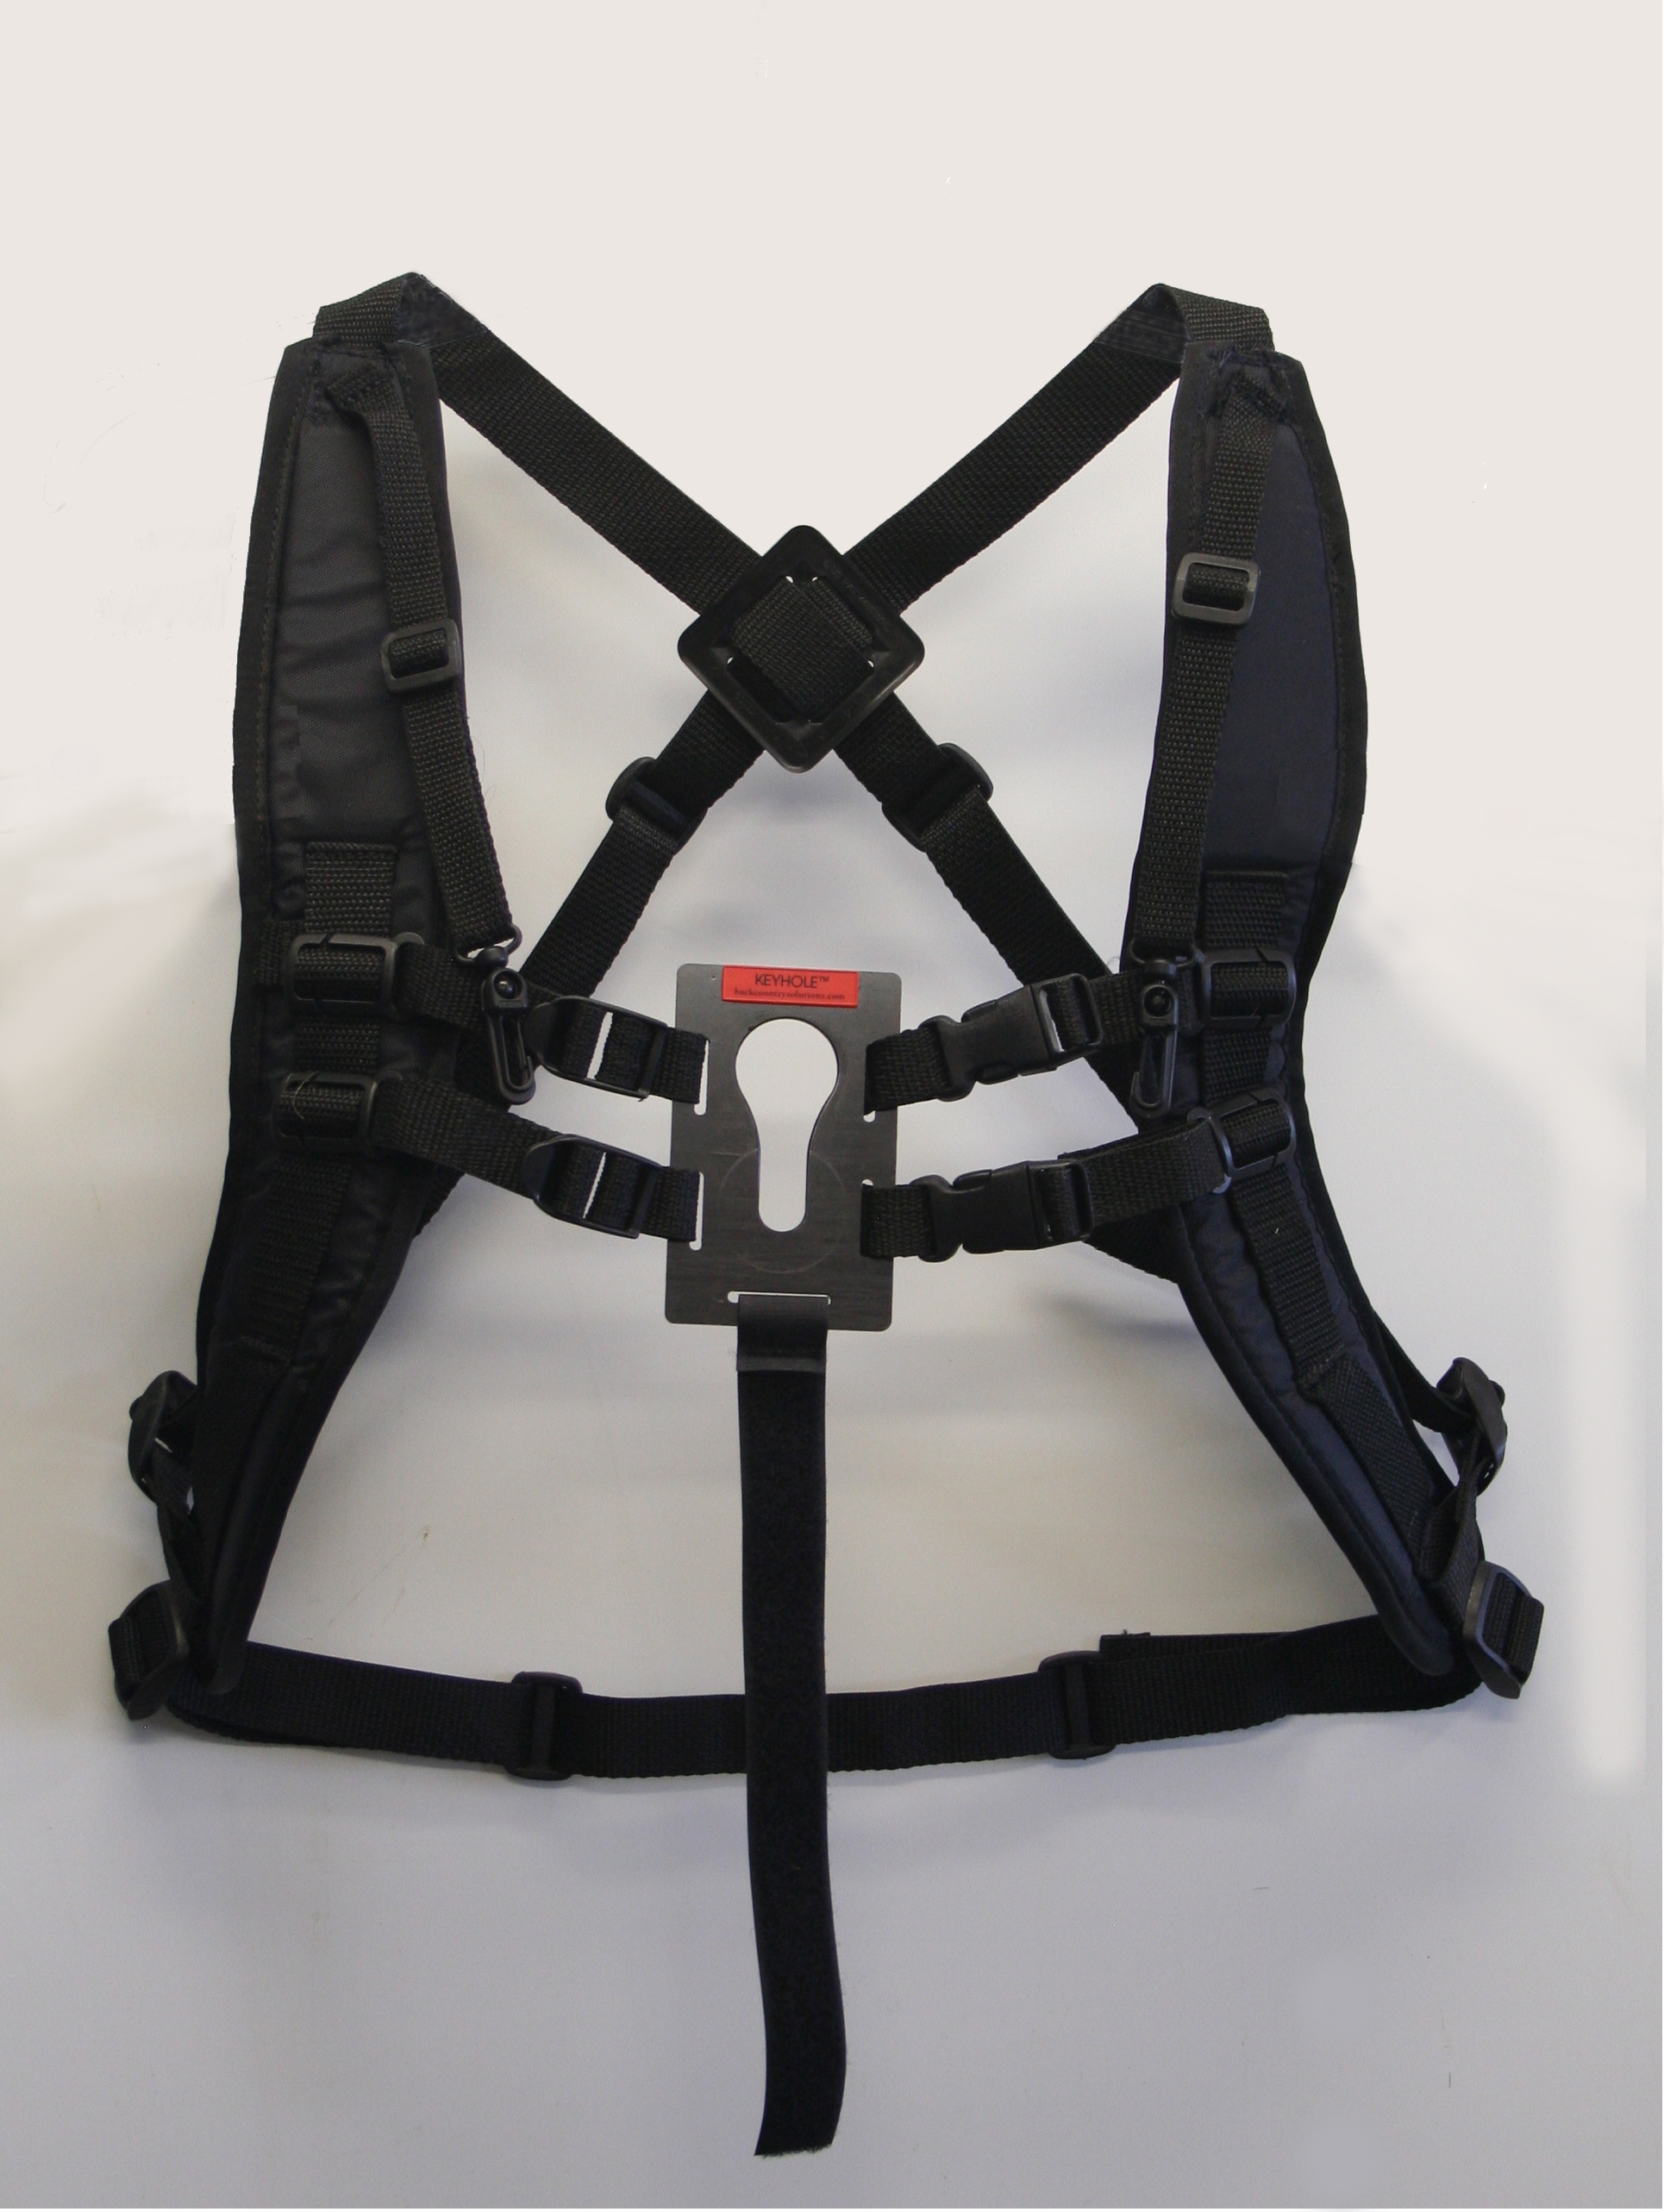 https://0201.nccdn.net/4_2/000/000/038/2d3/KEYHOLE-SYSTEM---shoulder-straps-and-harness-1930x2566.jpg